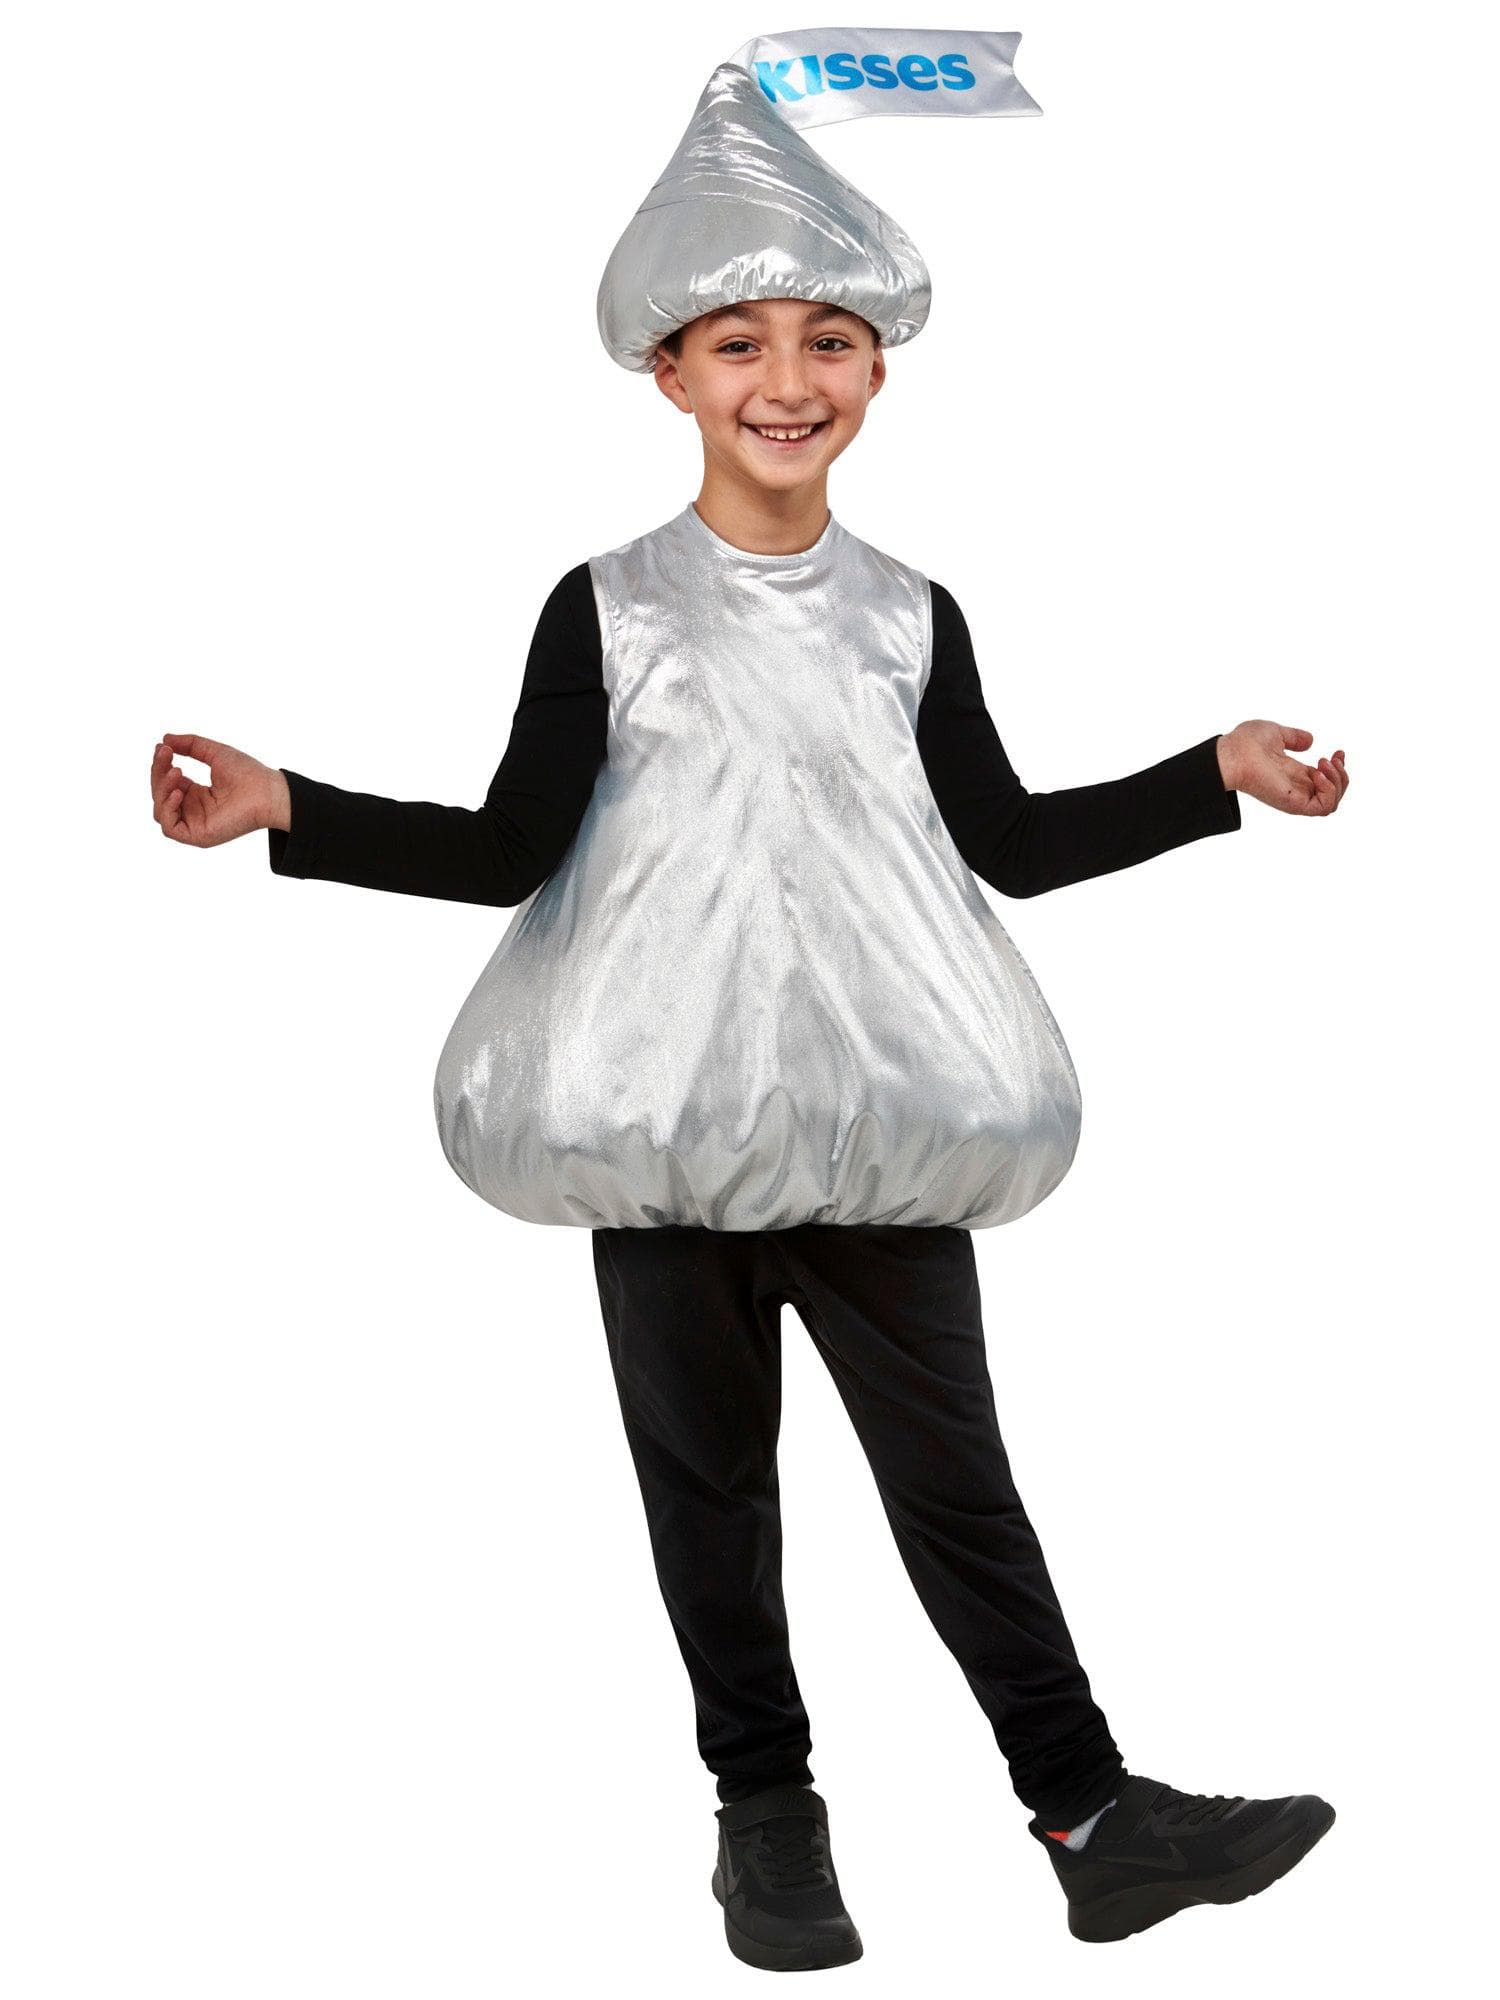 Hershey Kisses Kids Costume - costumes.com